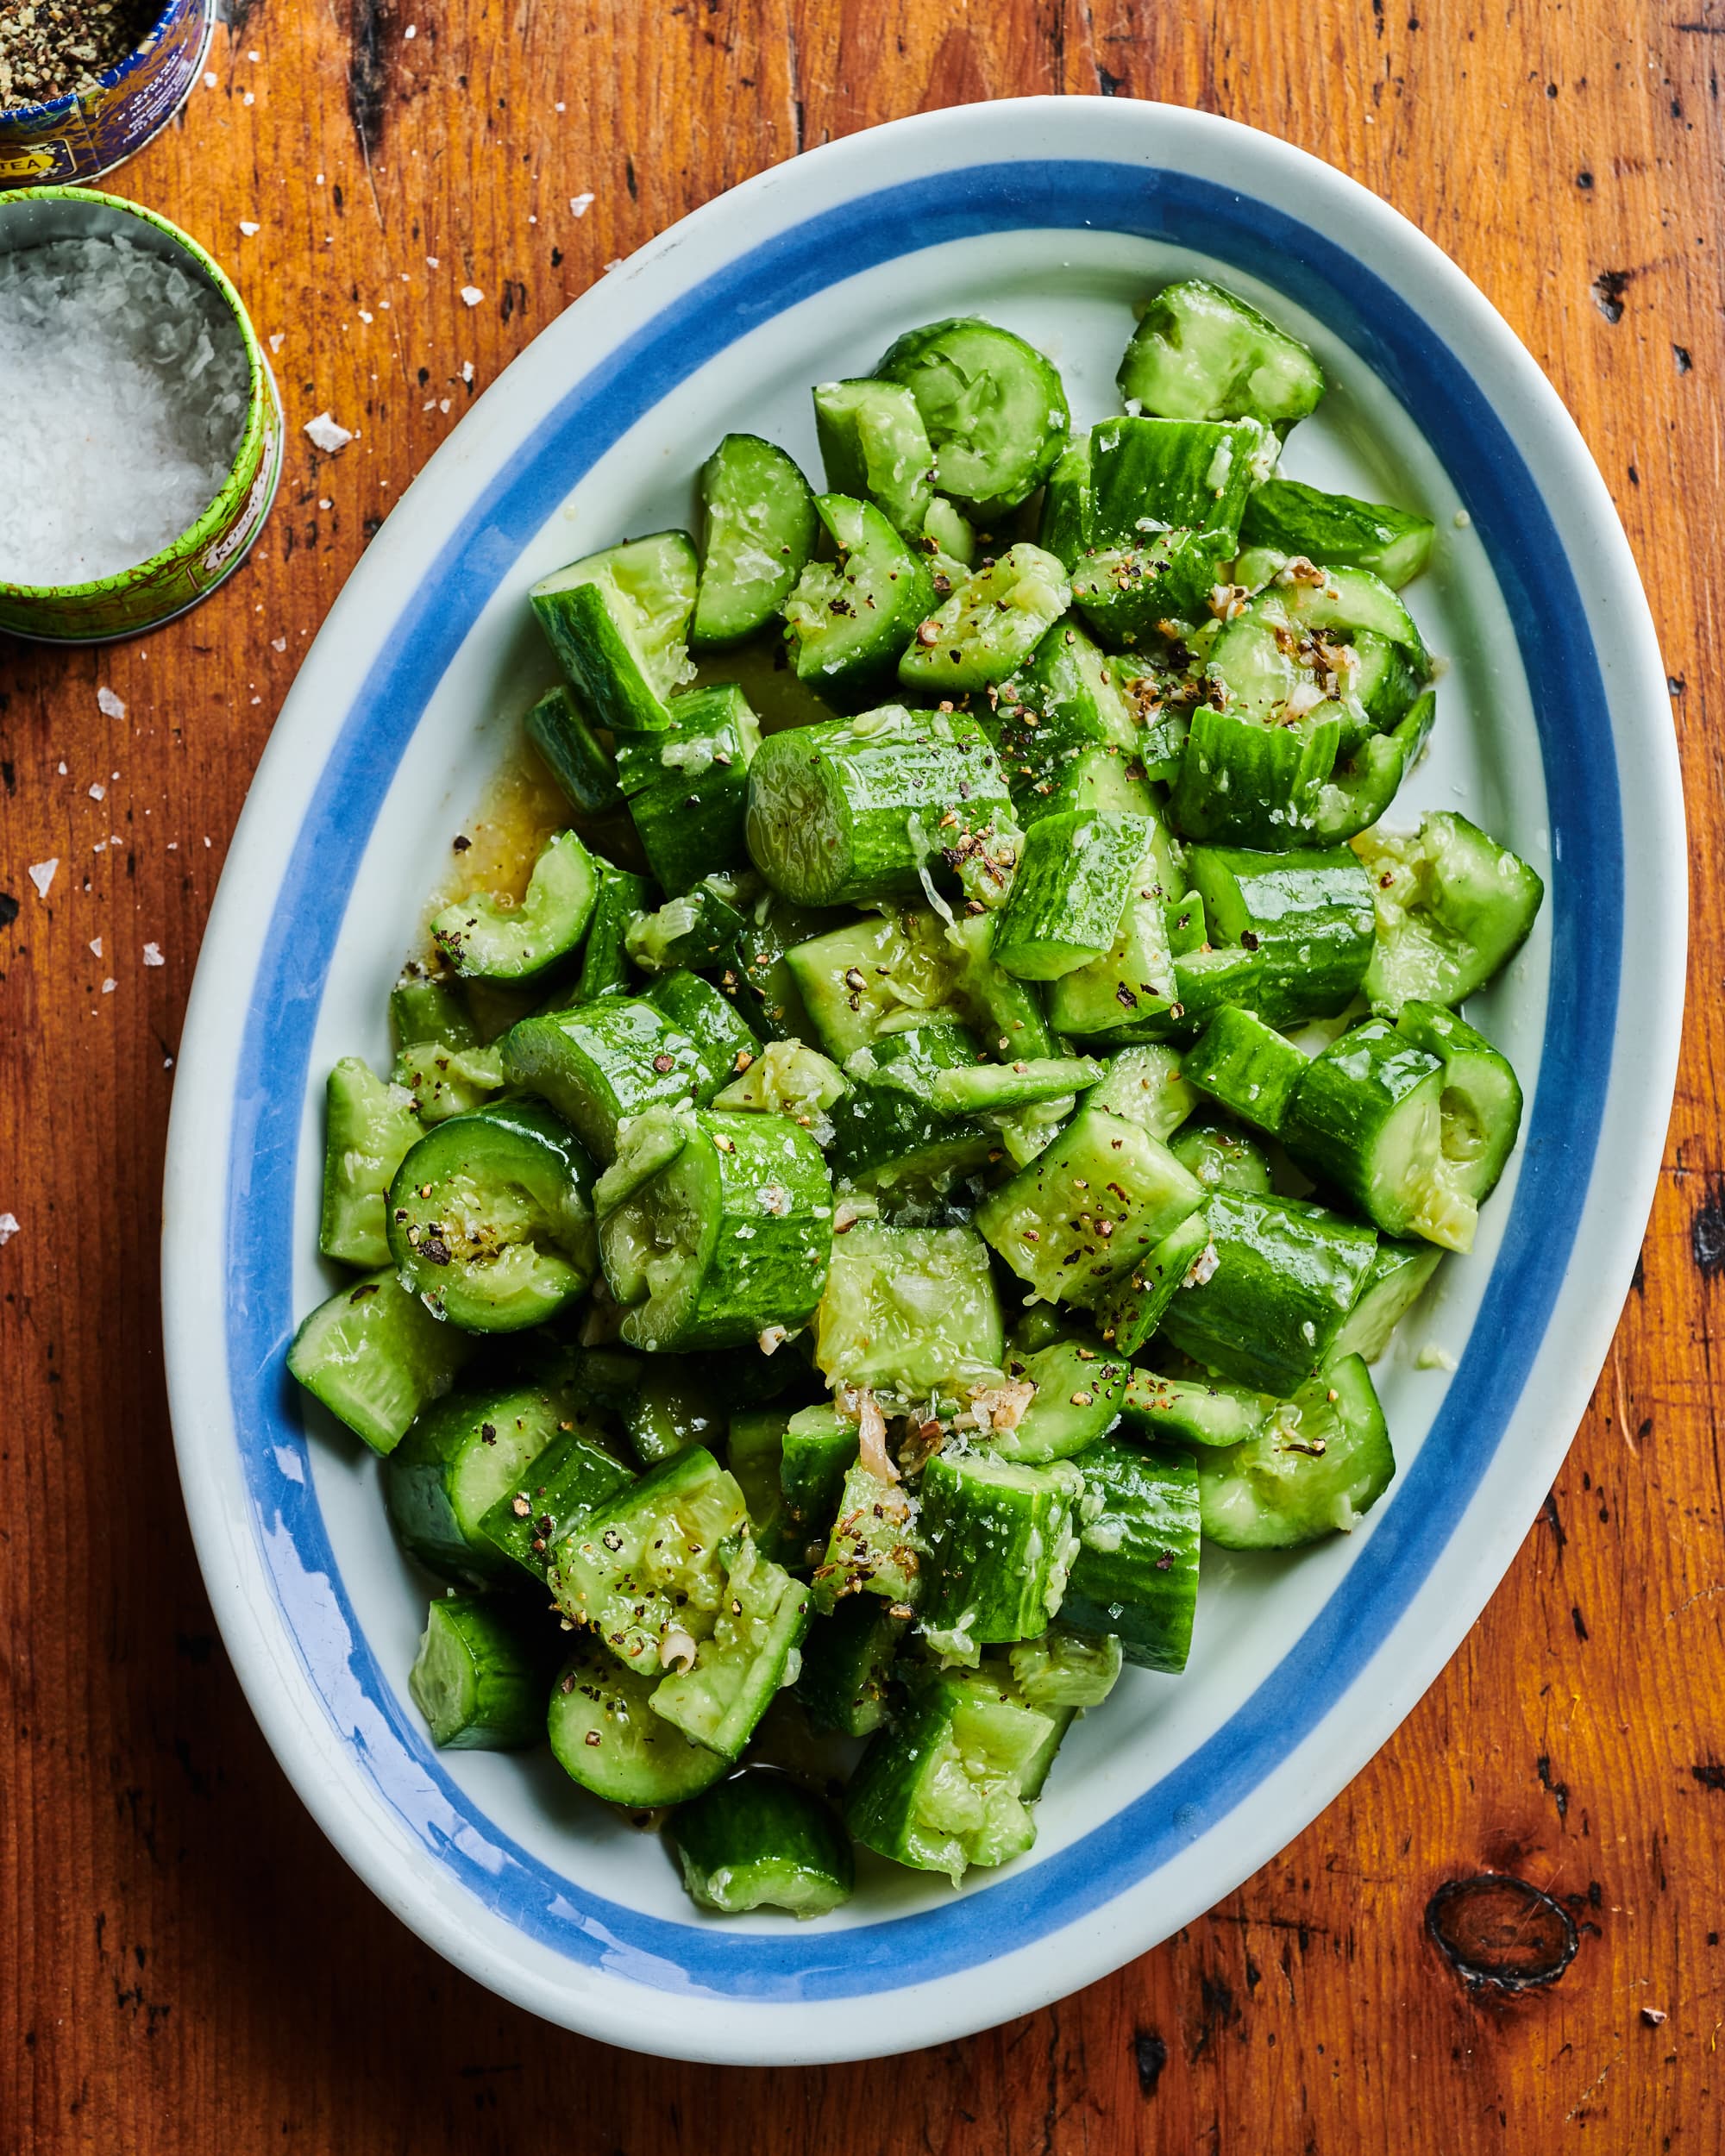 https://cdn.apartmenttherapy.info/image/upload/v1591372645/k/Photo/Recipes/2020-06-how-we-salad/Salads-Smashed-Cucumber/Salads-Smashed-Cucumber1379.jpg